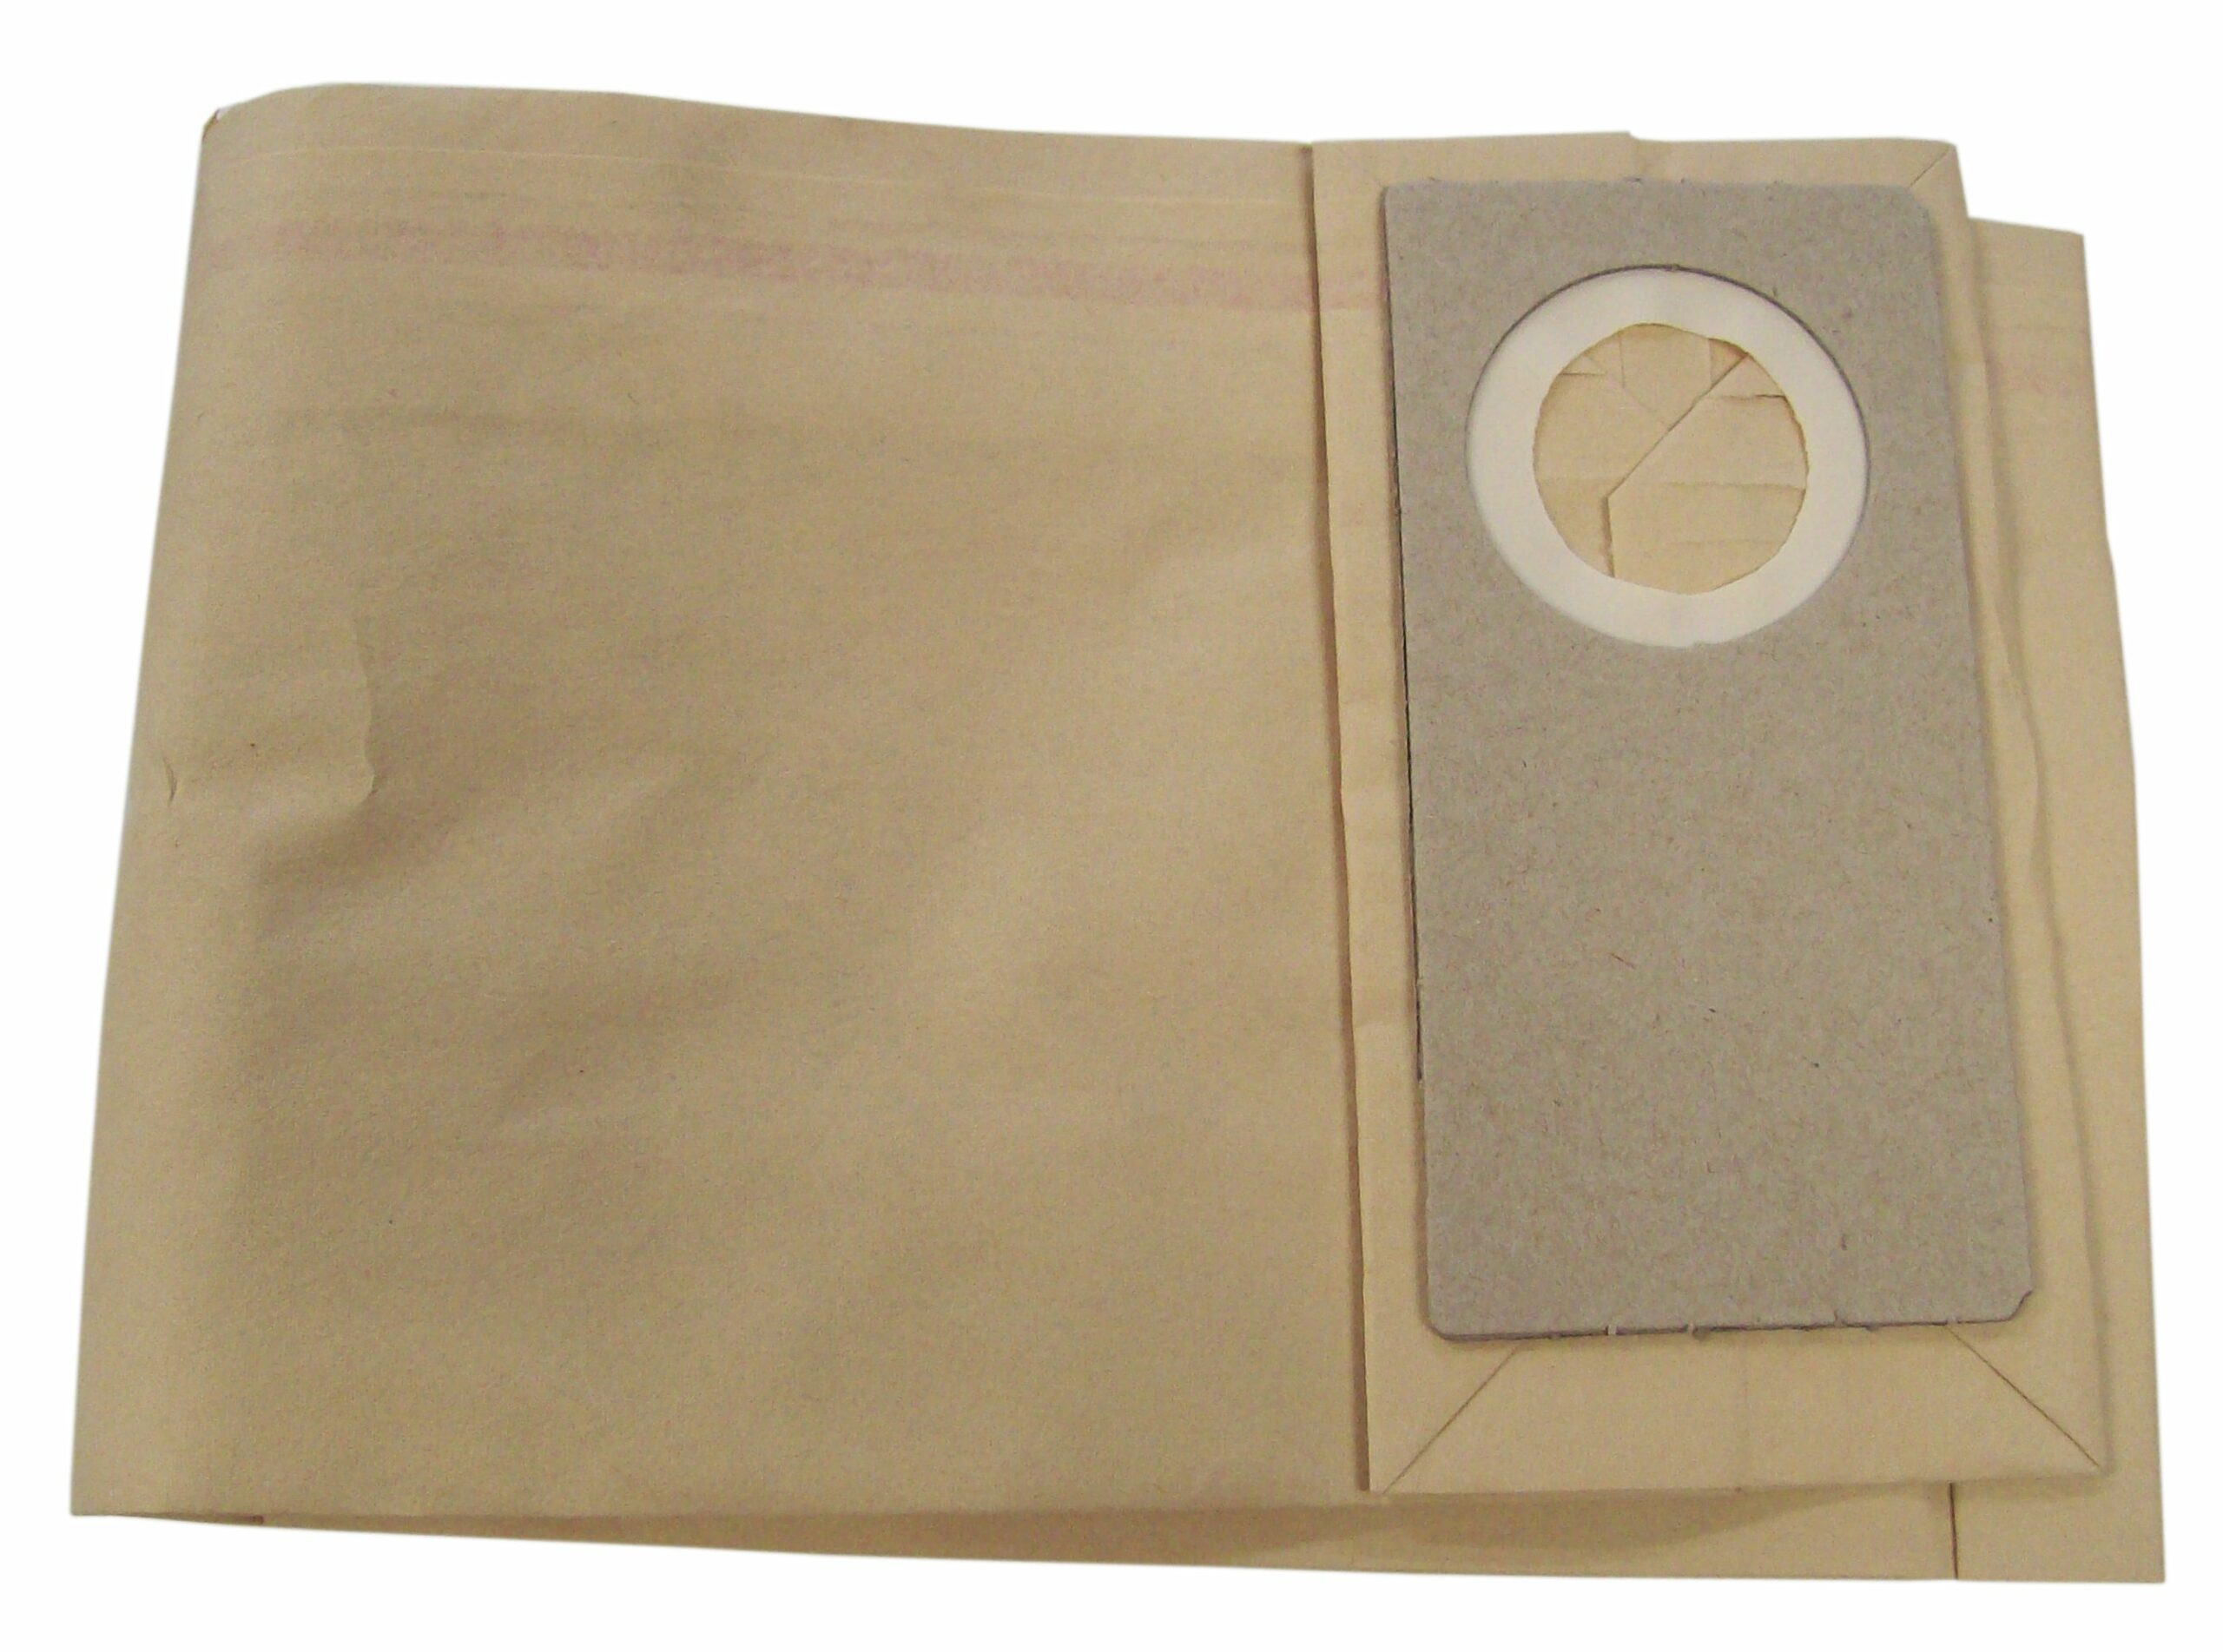 FILTA Hako Upright Paper Vacuum Cleaner Bags 5 Pack (18006)